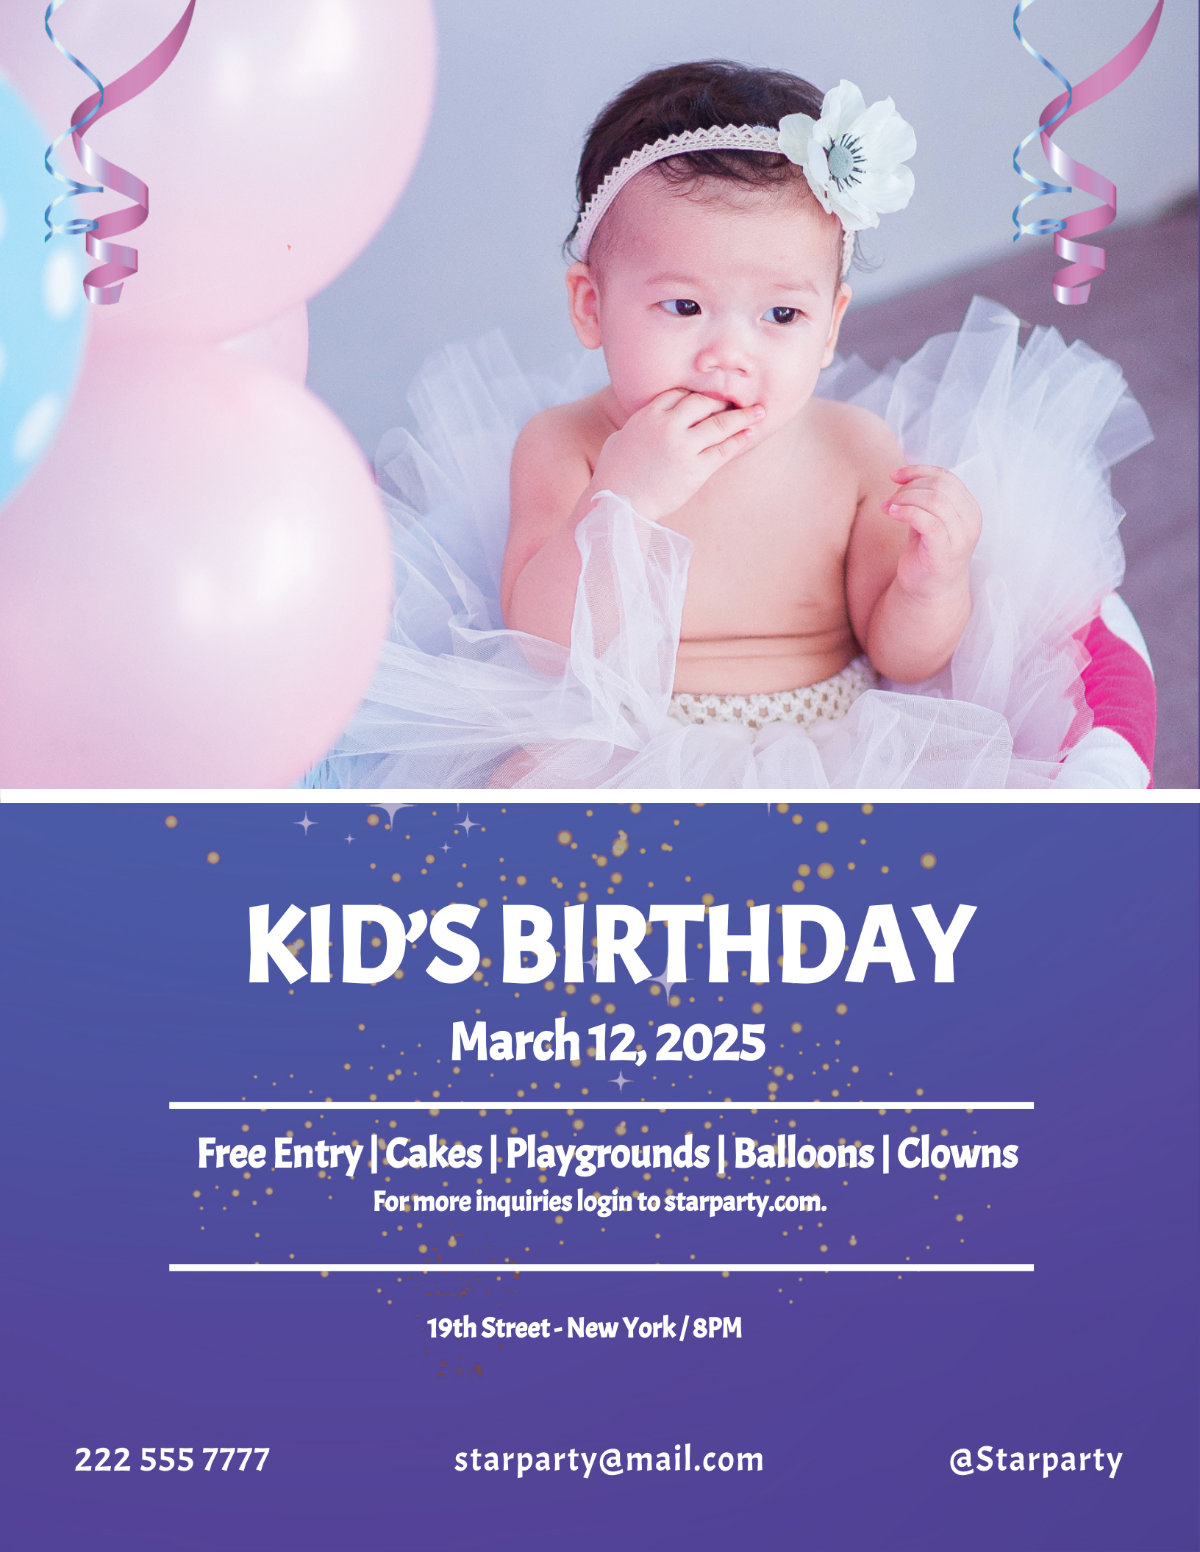 Kid's Birthday Party Flyer